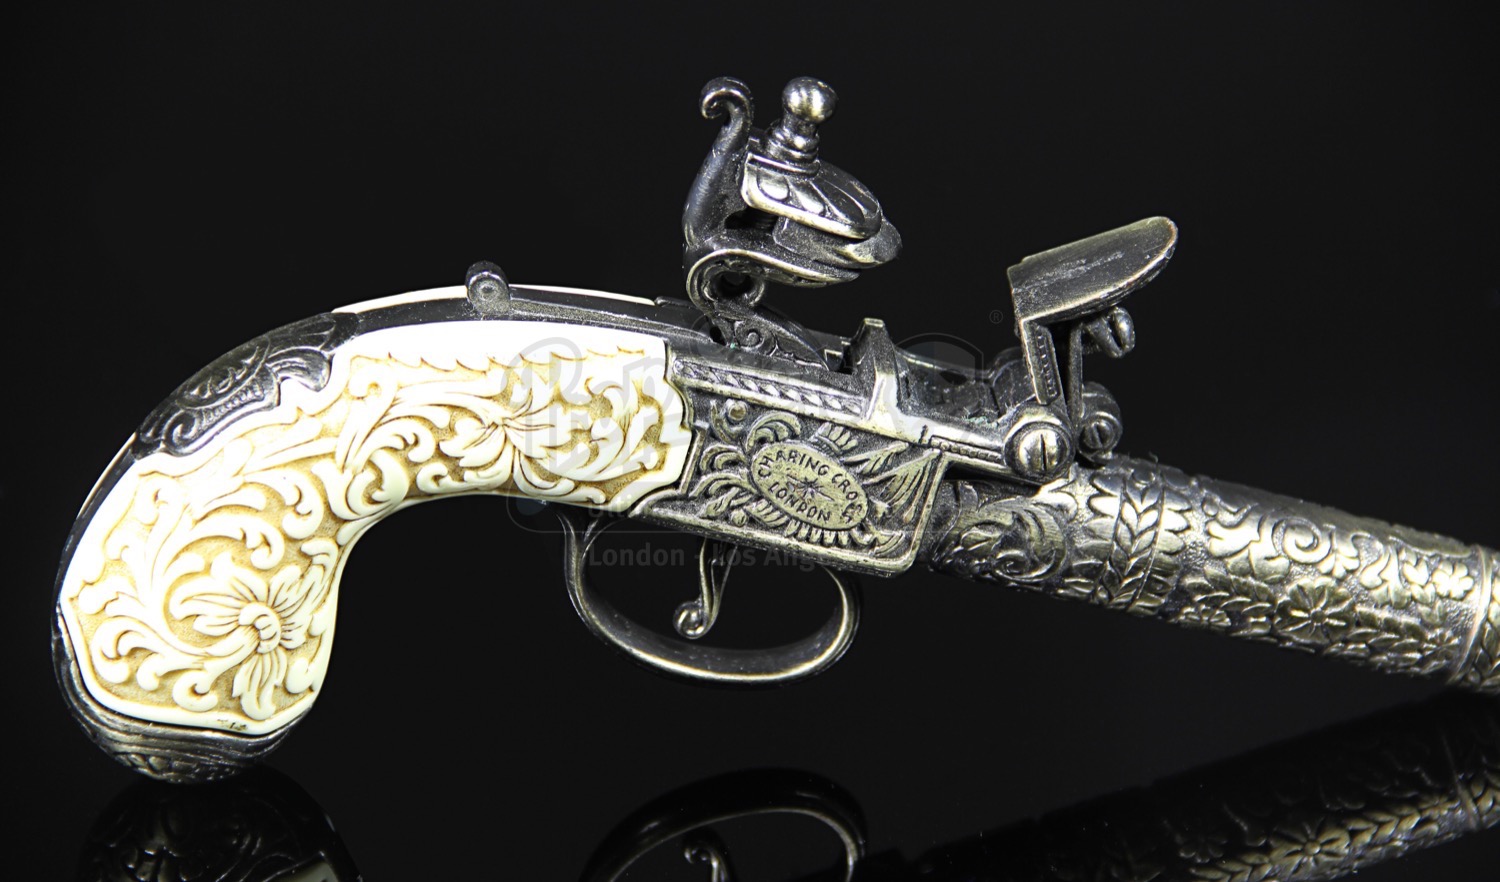 Ornate Flintlock Pistol - Current price: £275